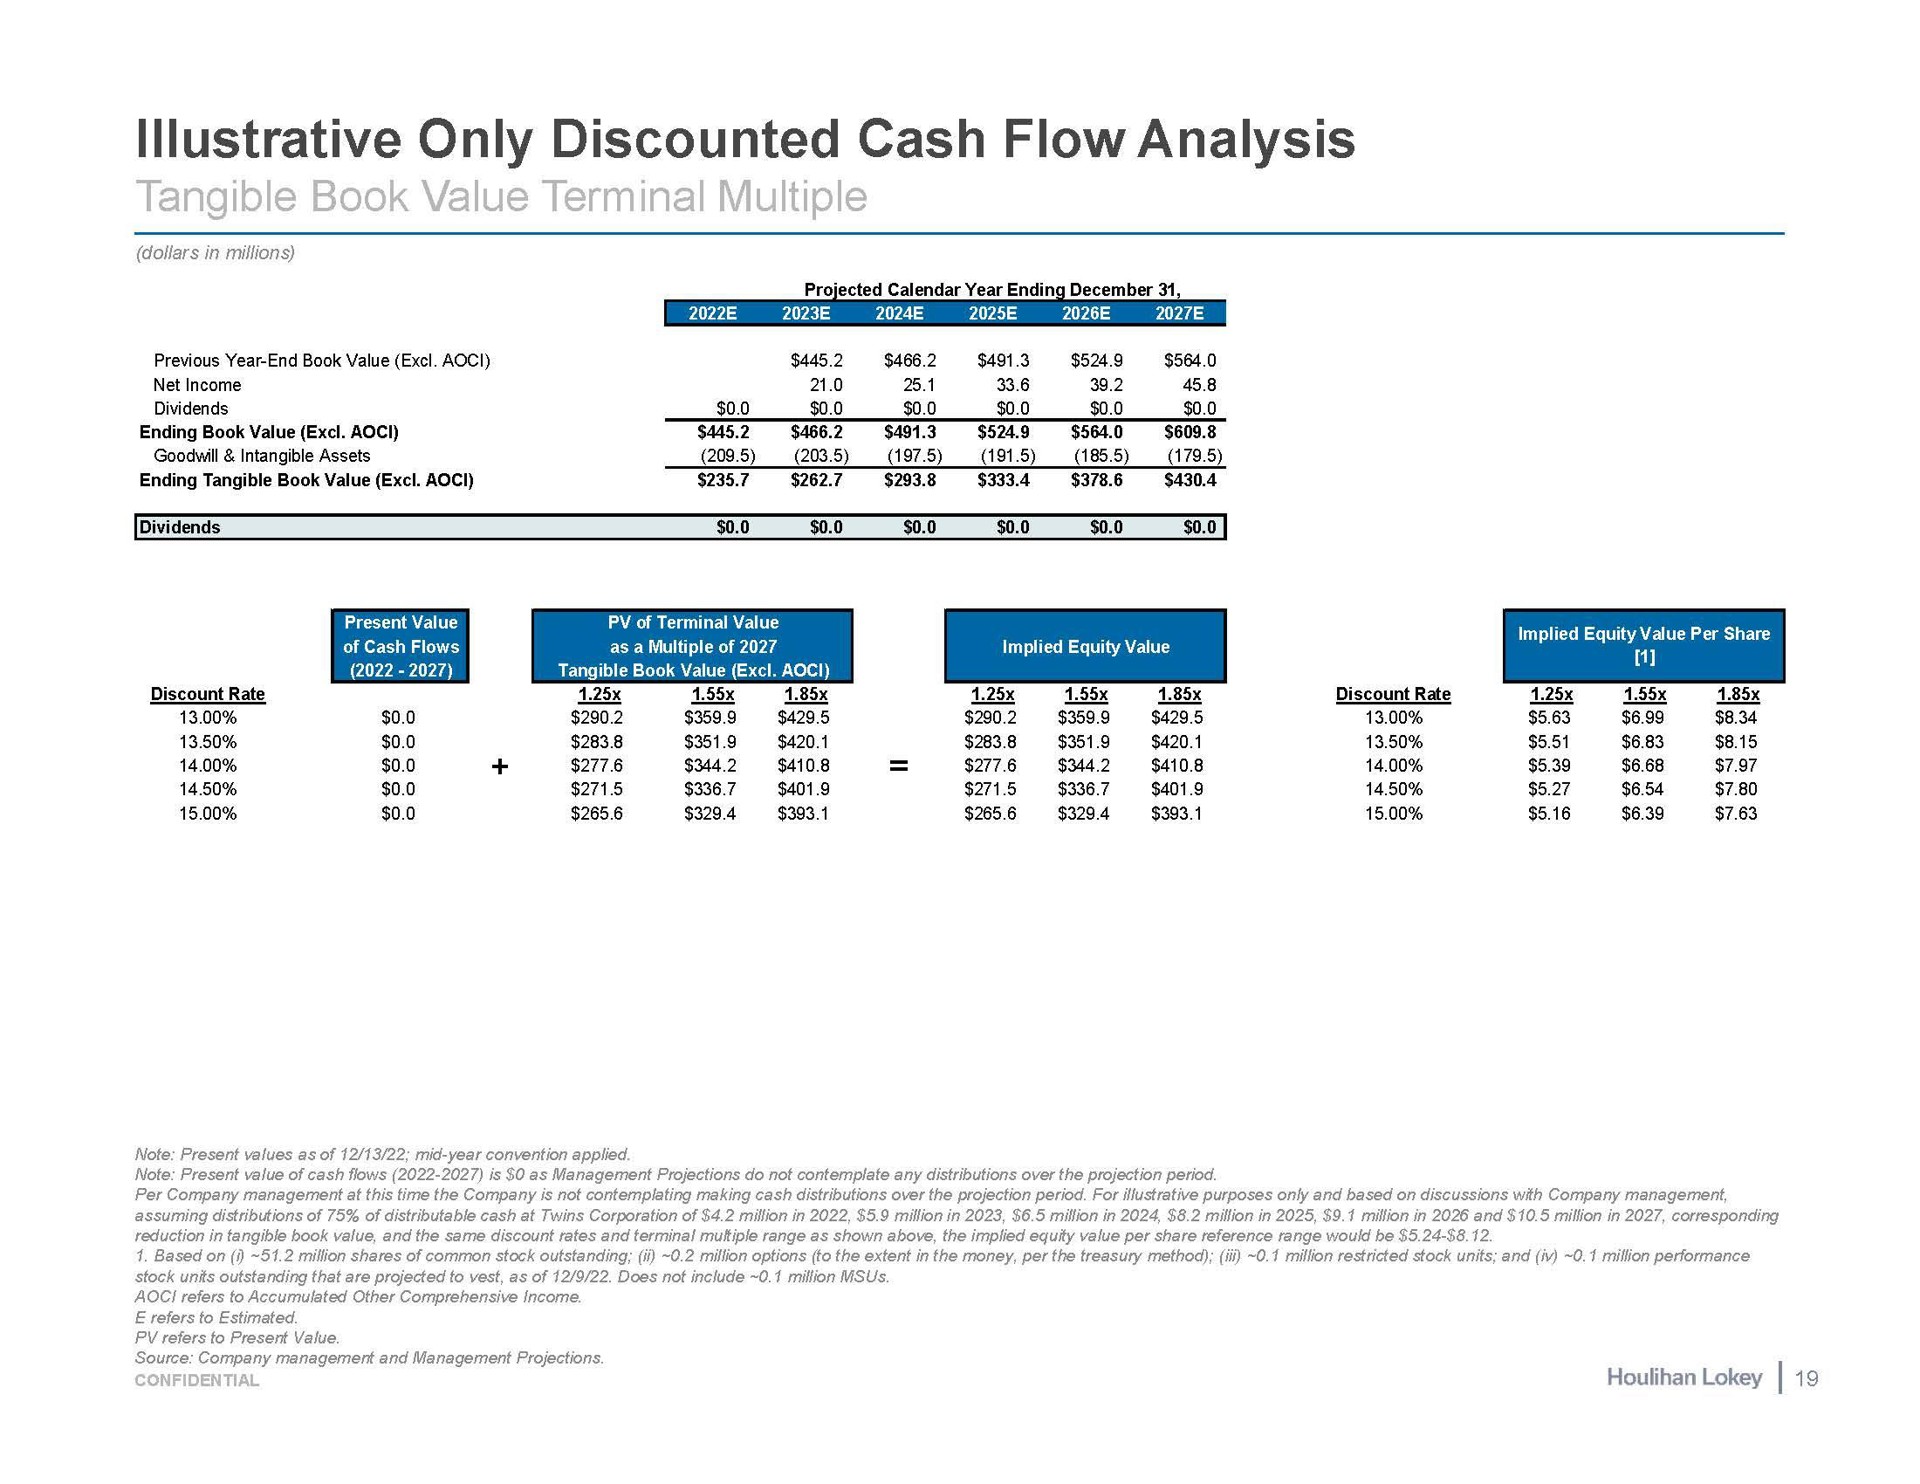 illustrative only discounted cash flow analysis | Houlihan Lokey